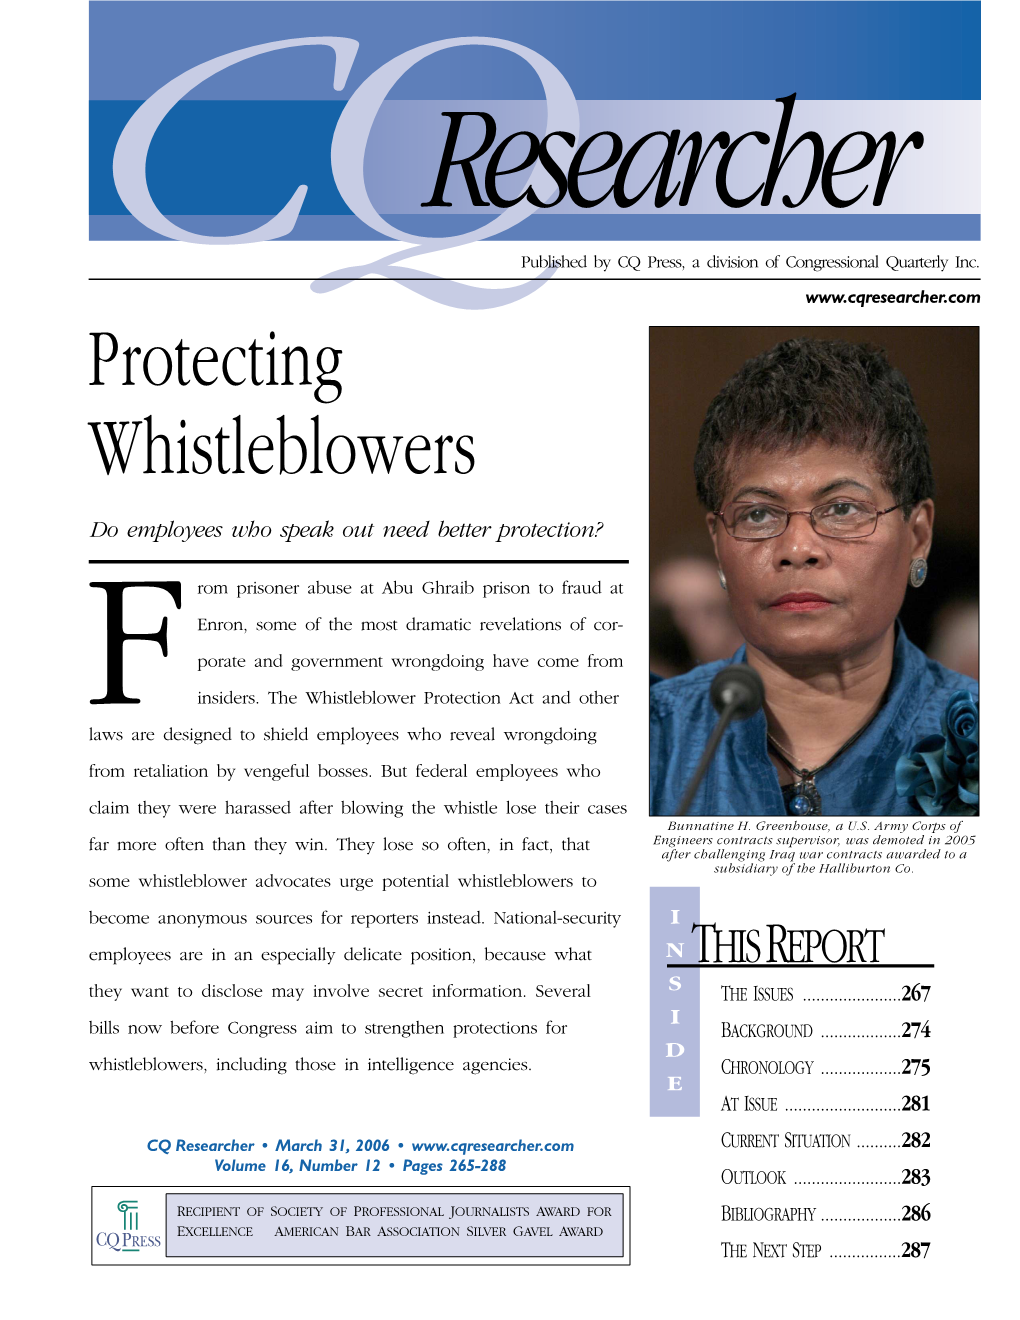 Protecting Whistleblowers